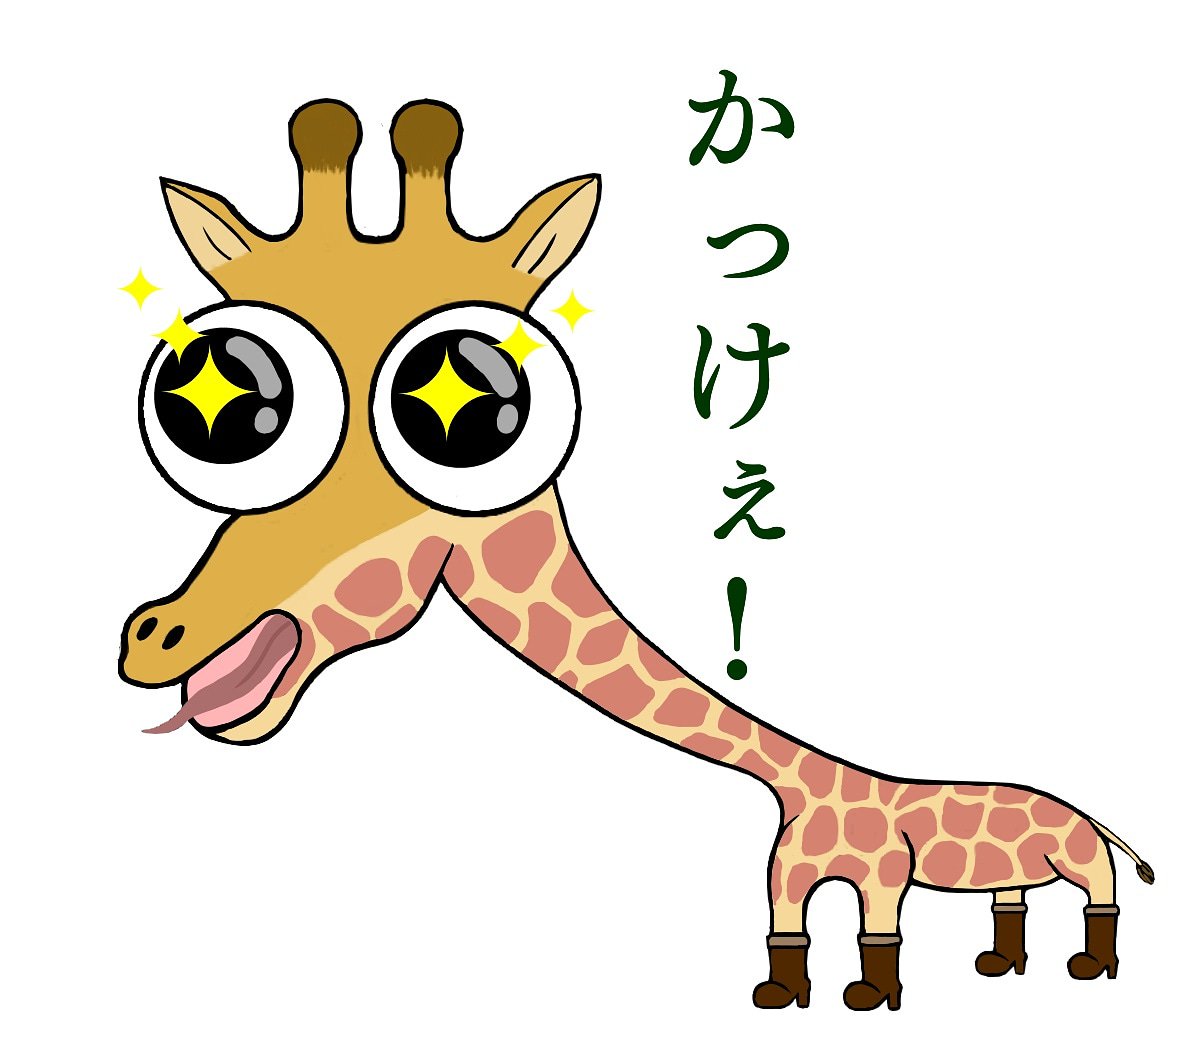 Uzivatel Eye S Chara Na Twitteru 目指せスタンプ シリーズ か の付くセリフ キリンの かっけぇ Eye S Animal Illustration Giraffe Cool Handsome Hot So どうぶつ 動物 アイズ お絵かき お絵描き イラスト キリン 麒麟 カッコいい